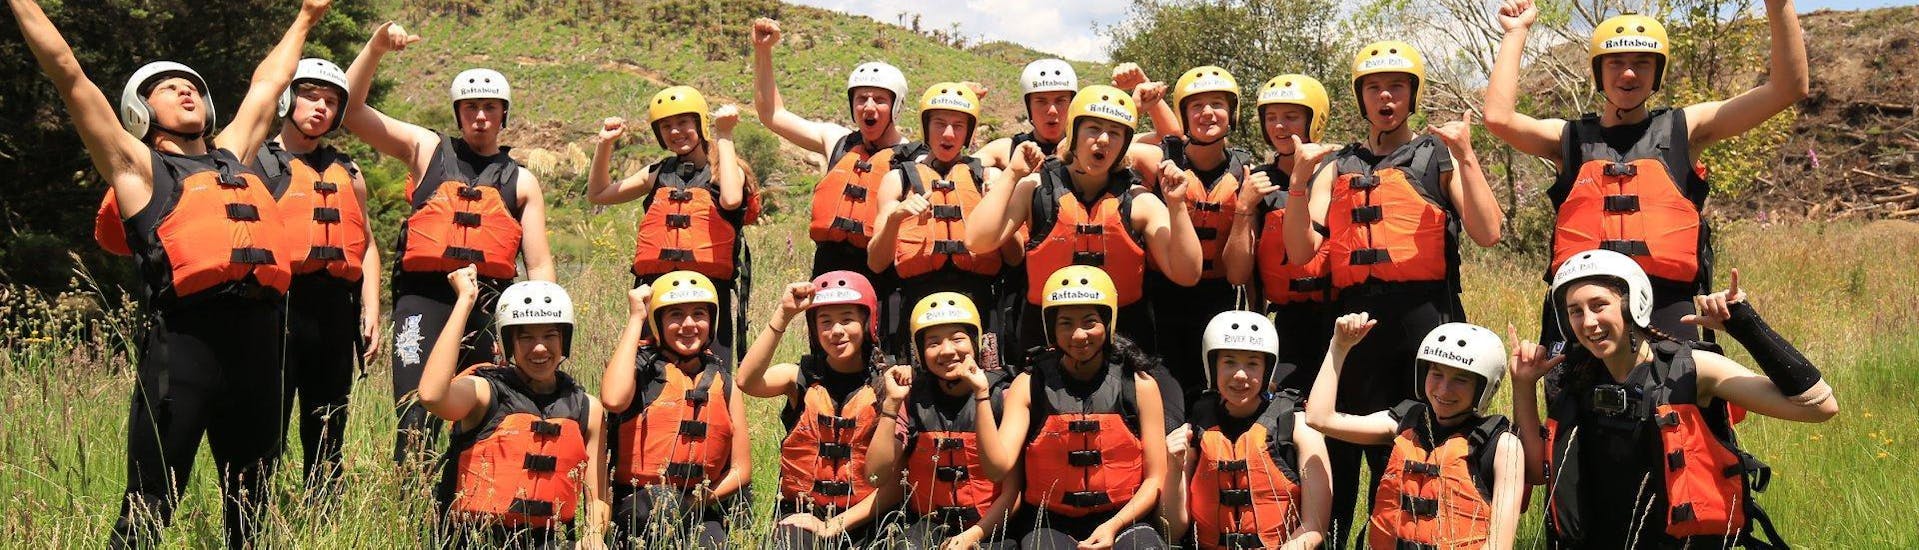 The tour participants prepare for their rotorua rafting waterfall experience summer tour of River Rats Rotorua Raft & Kayak.